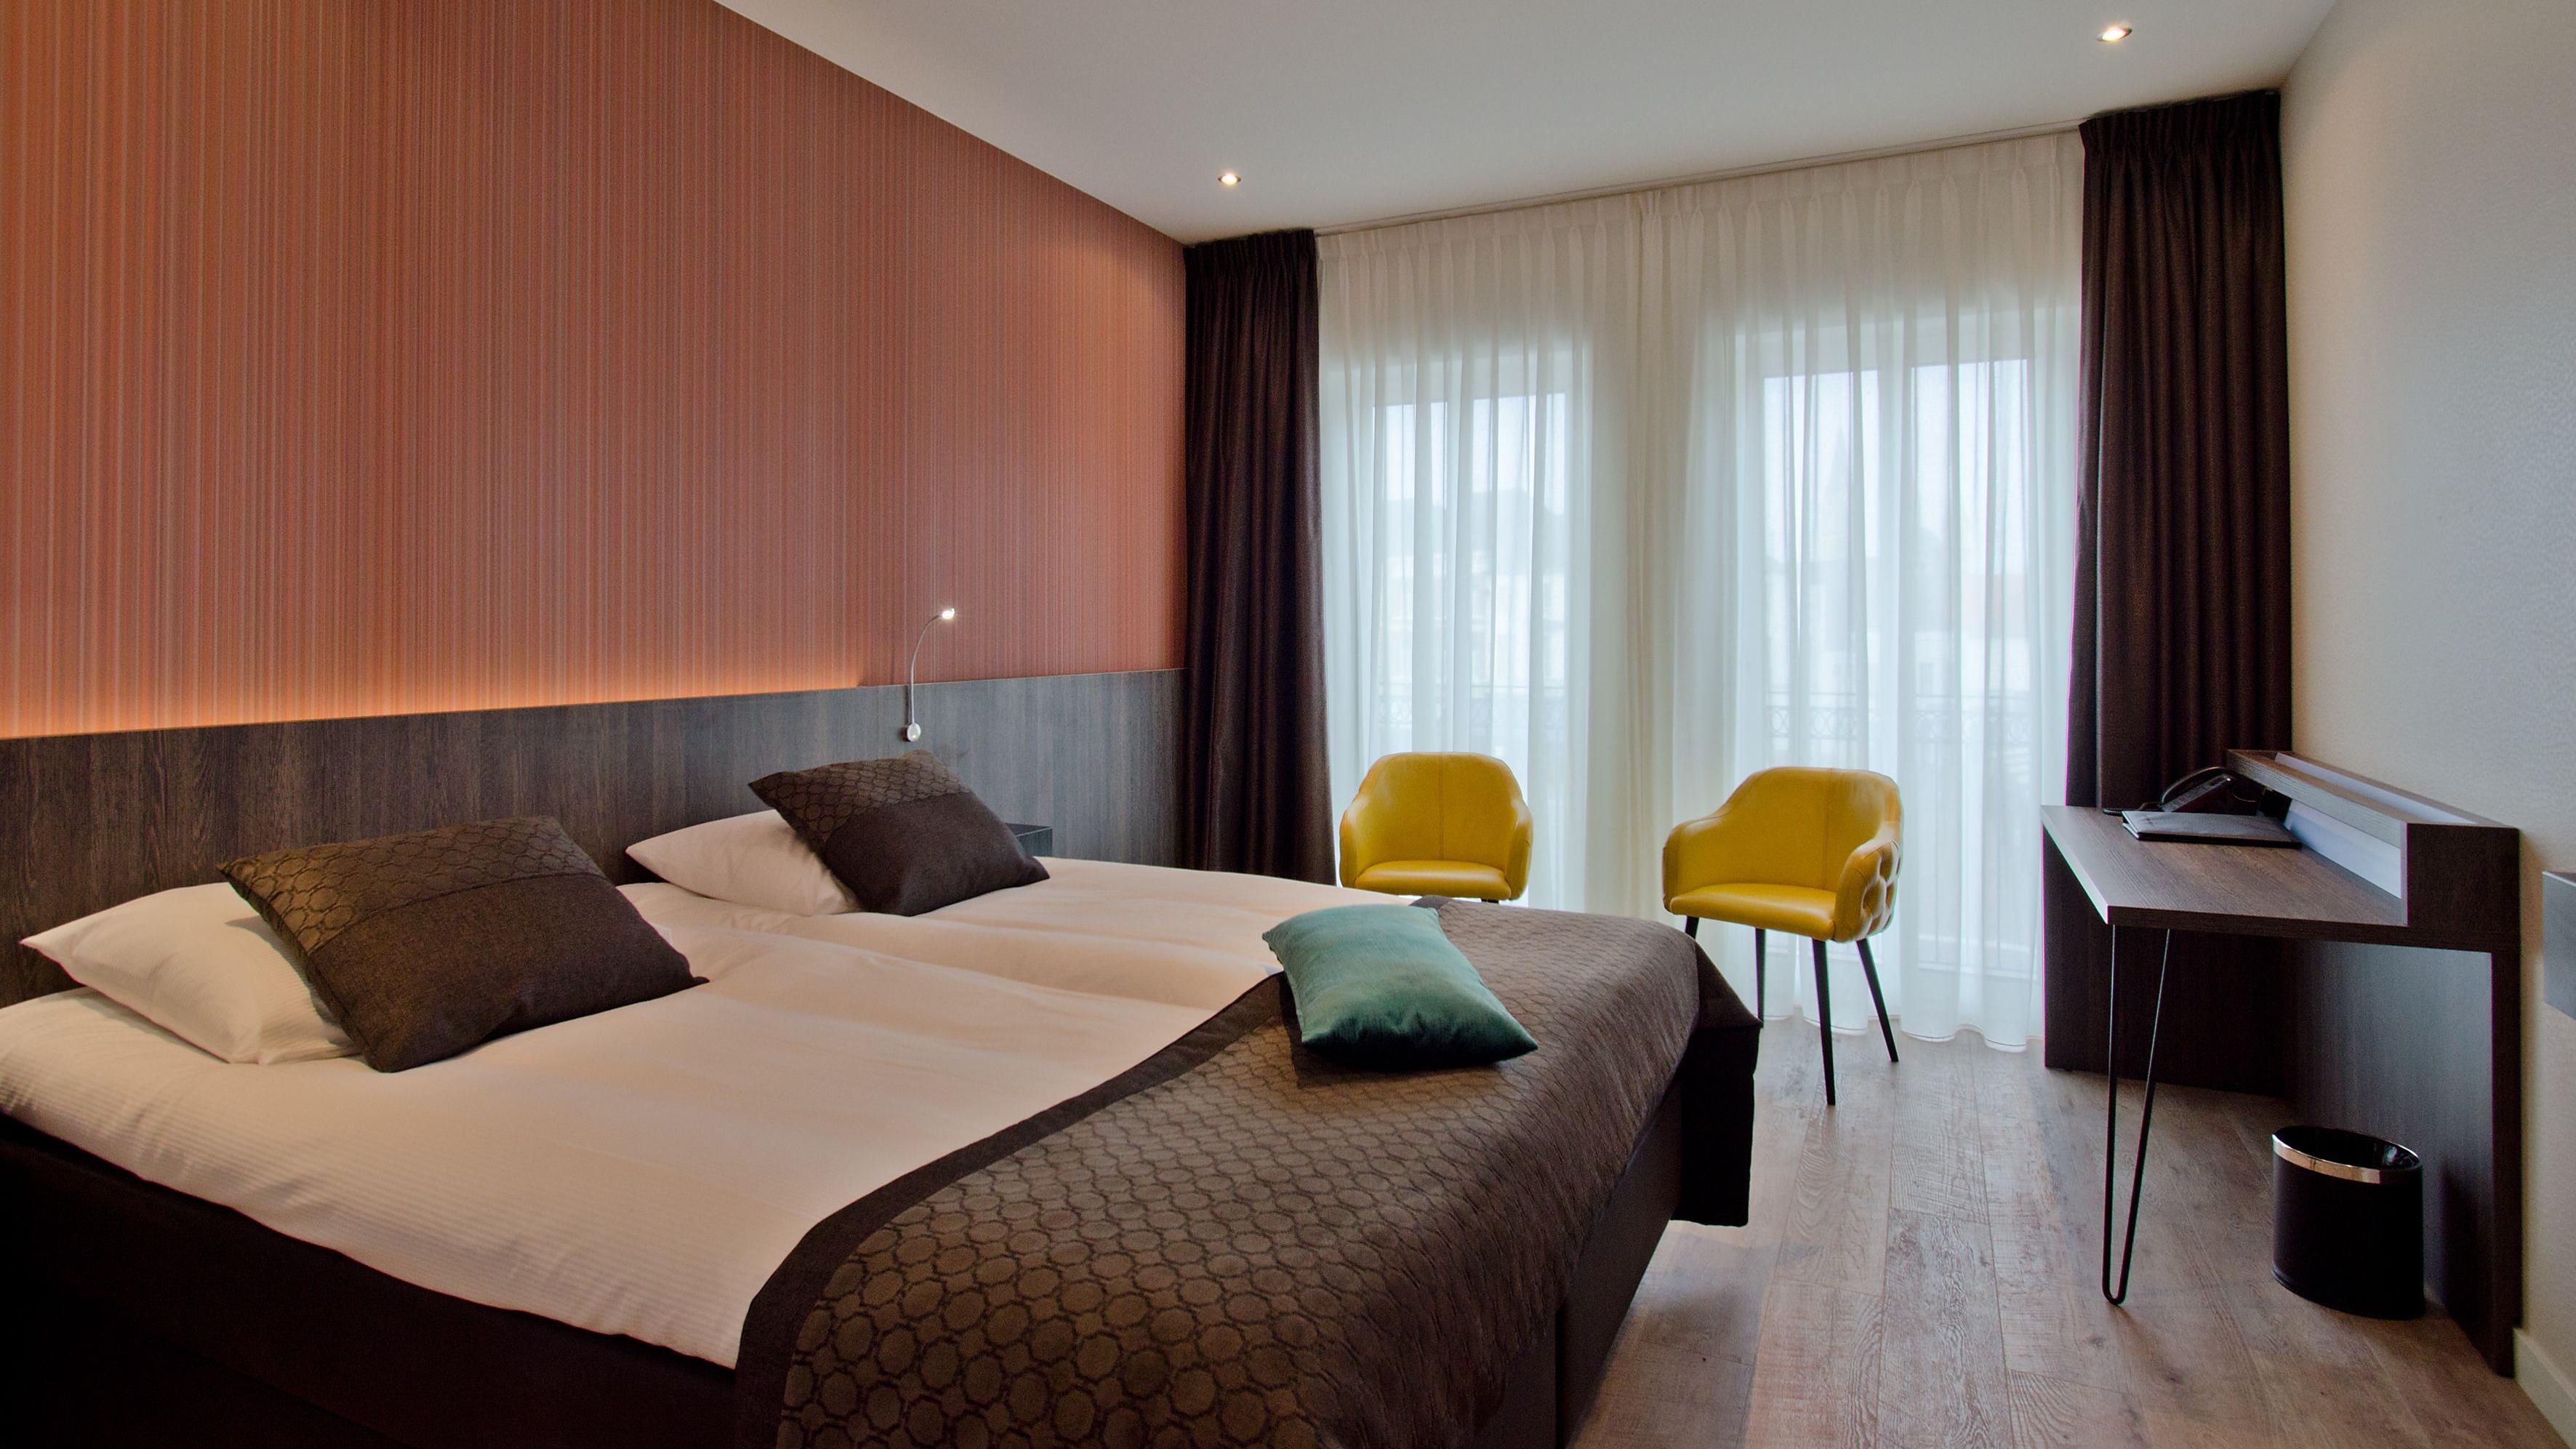 Hotel-Roermond-kamer (1).jpeg